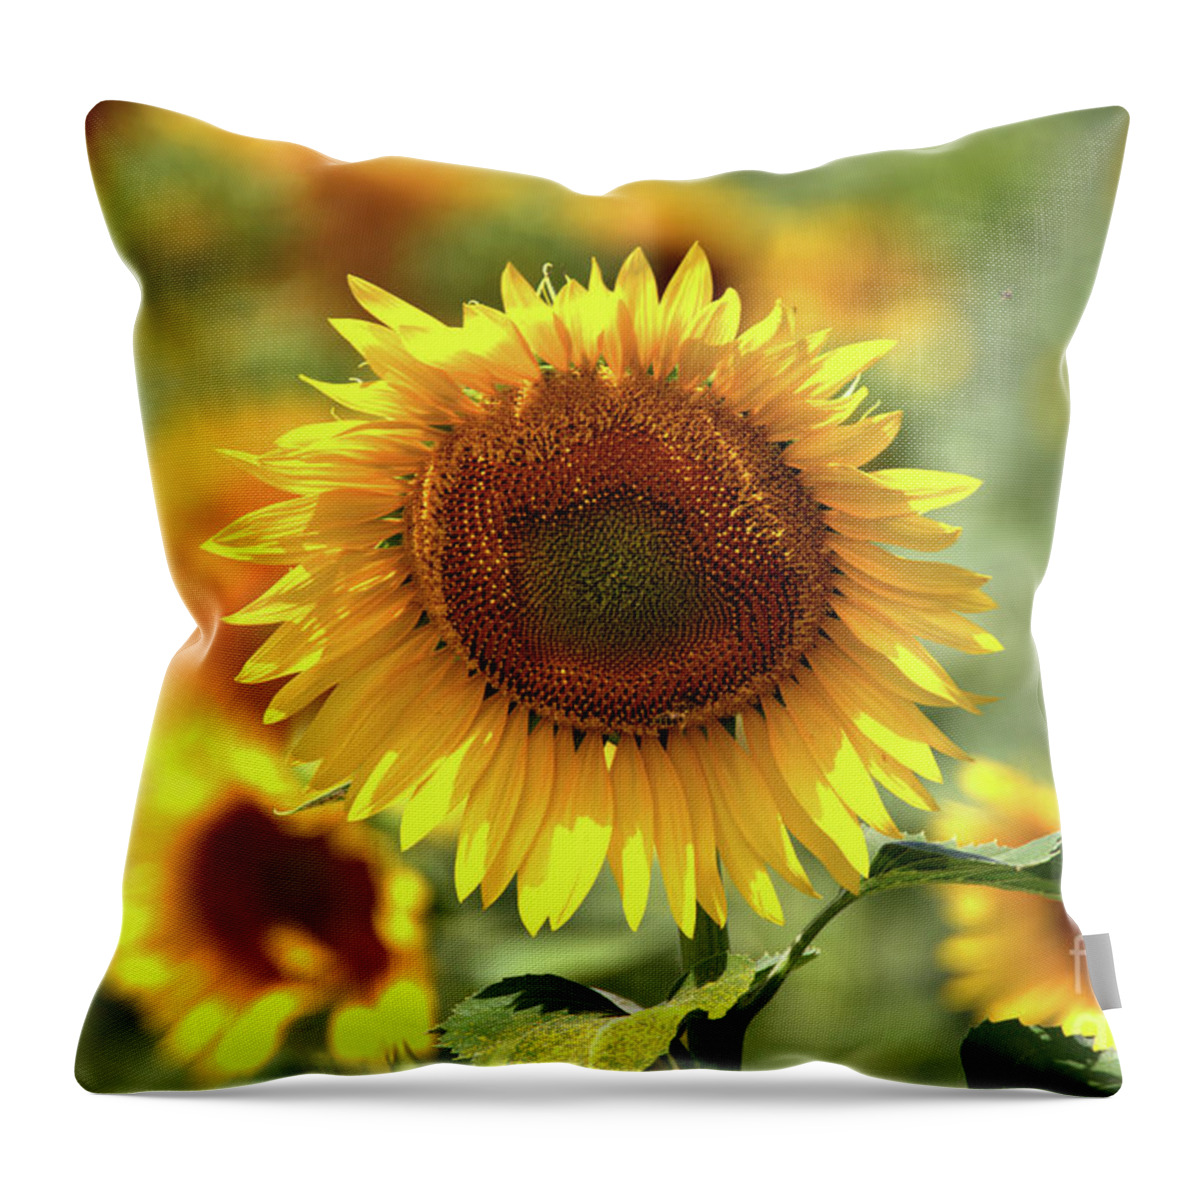 Sunflower Throw Pillow featuring the photograph Sunflower by Geraldine DeBoer